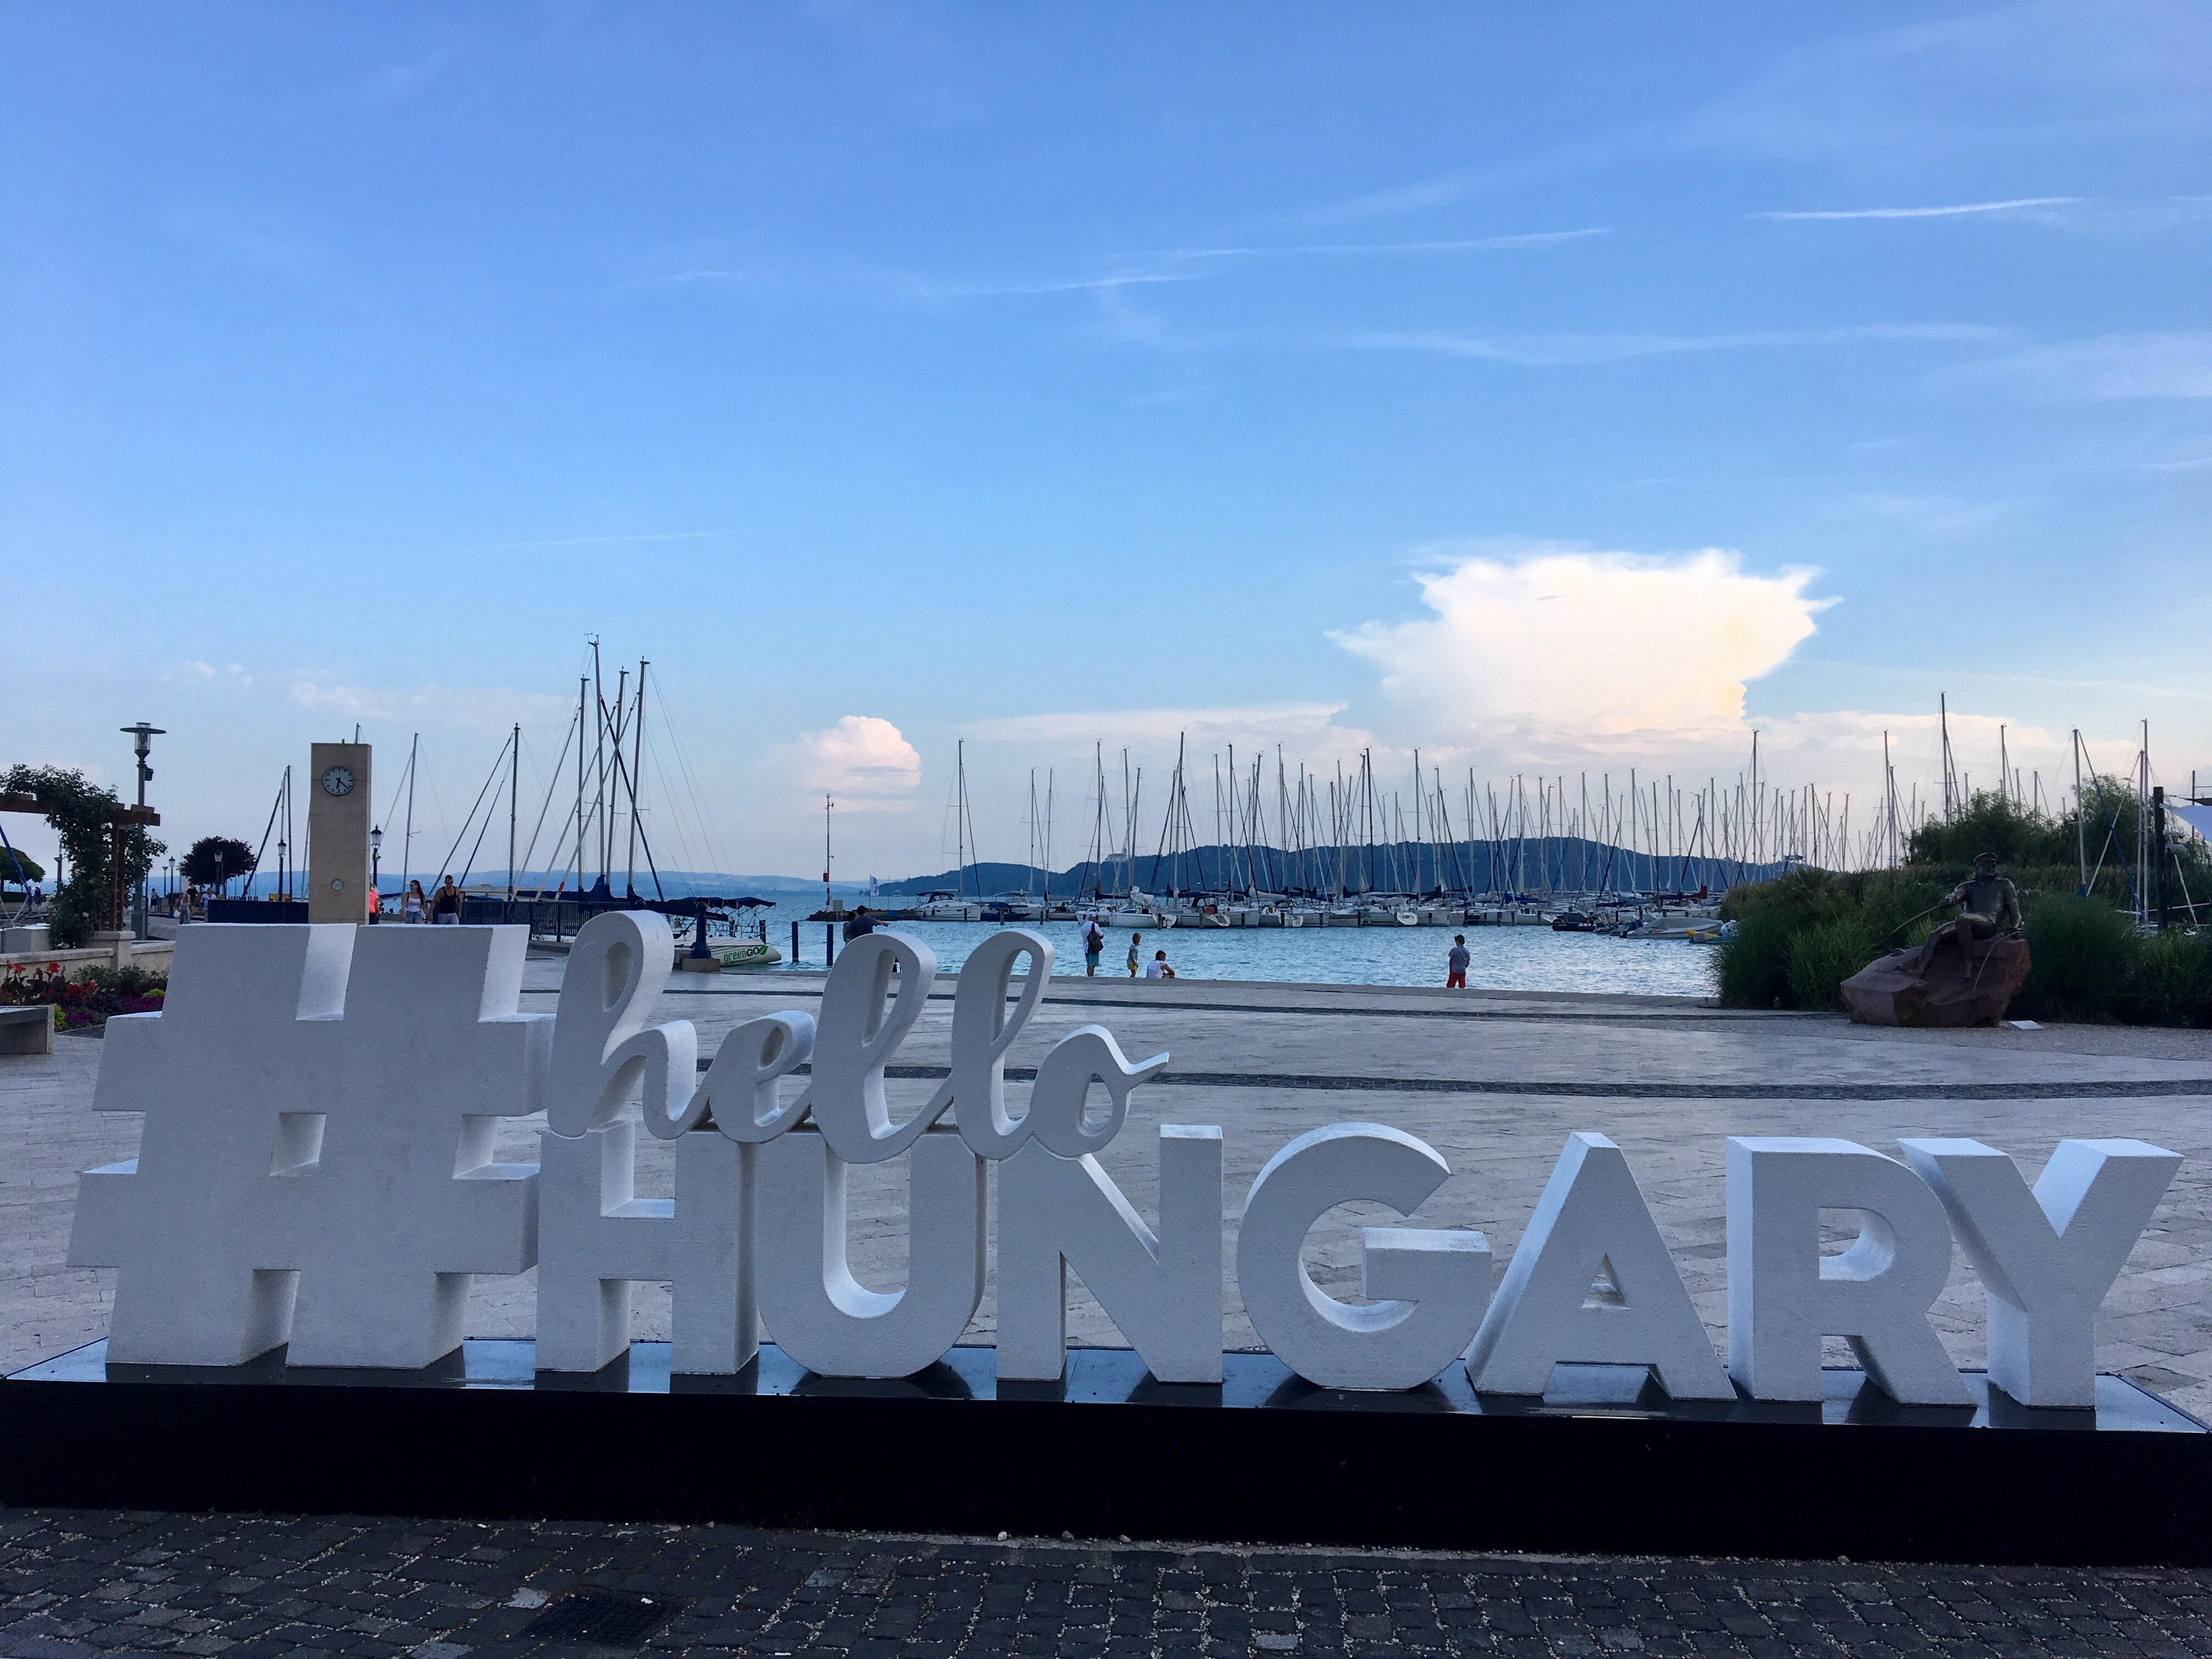 Tagore sétány, hello Hungary